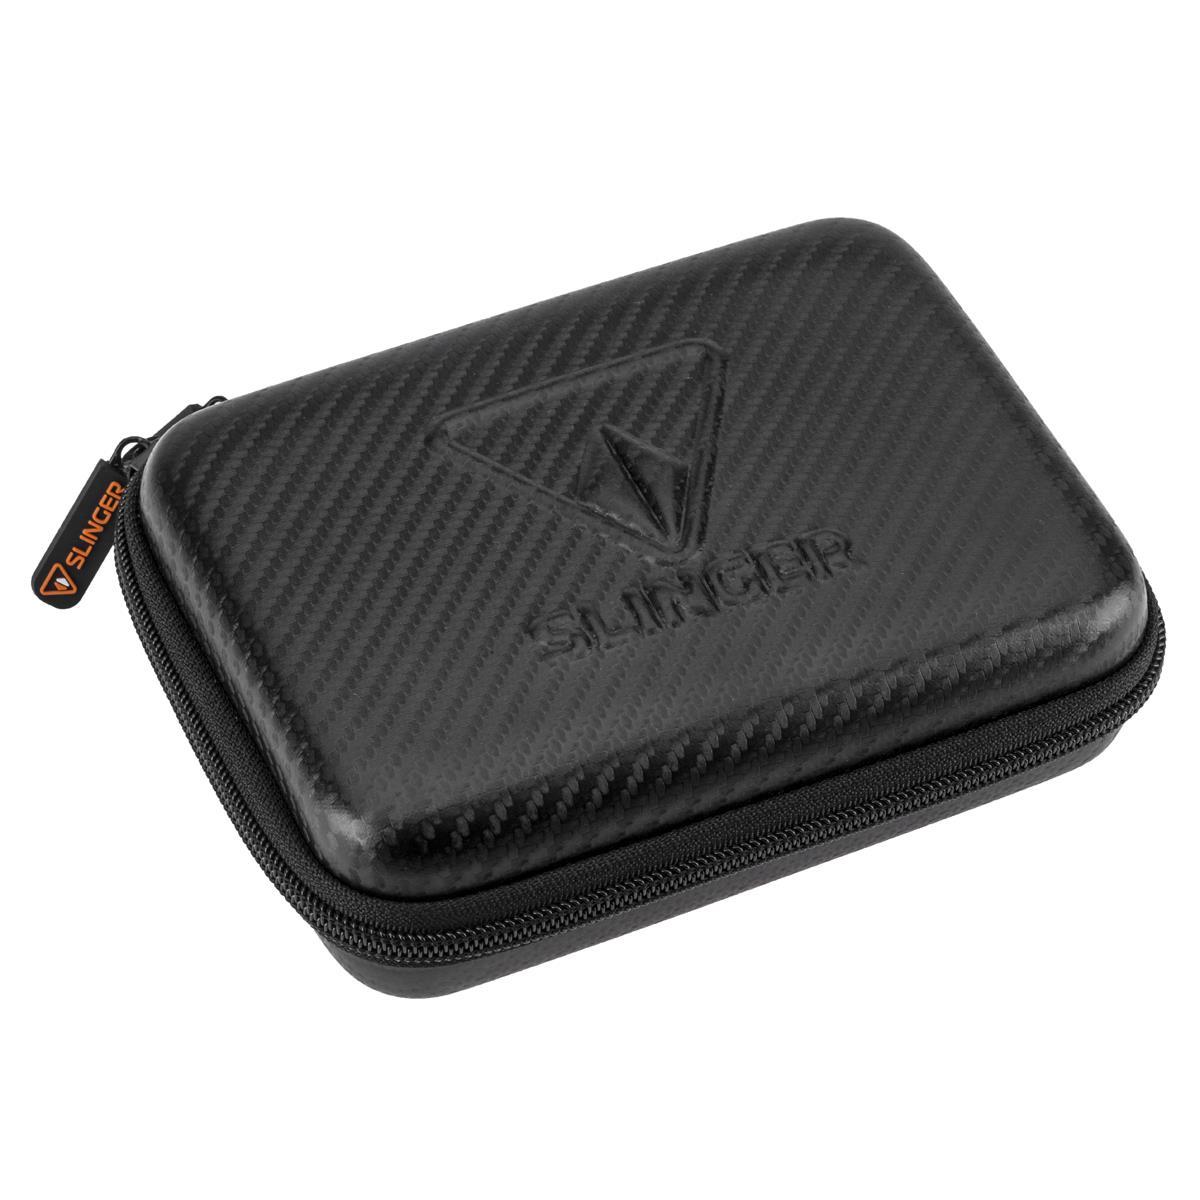 Image of Slinger HD-1 Portable Drive Case